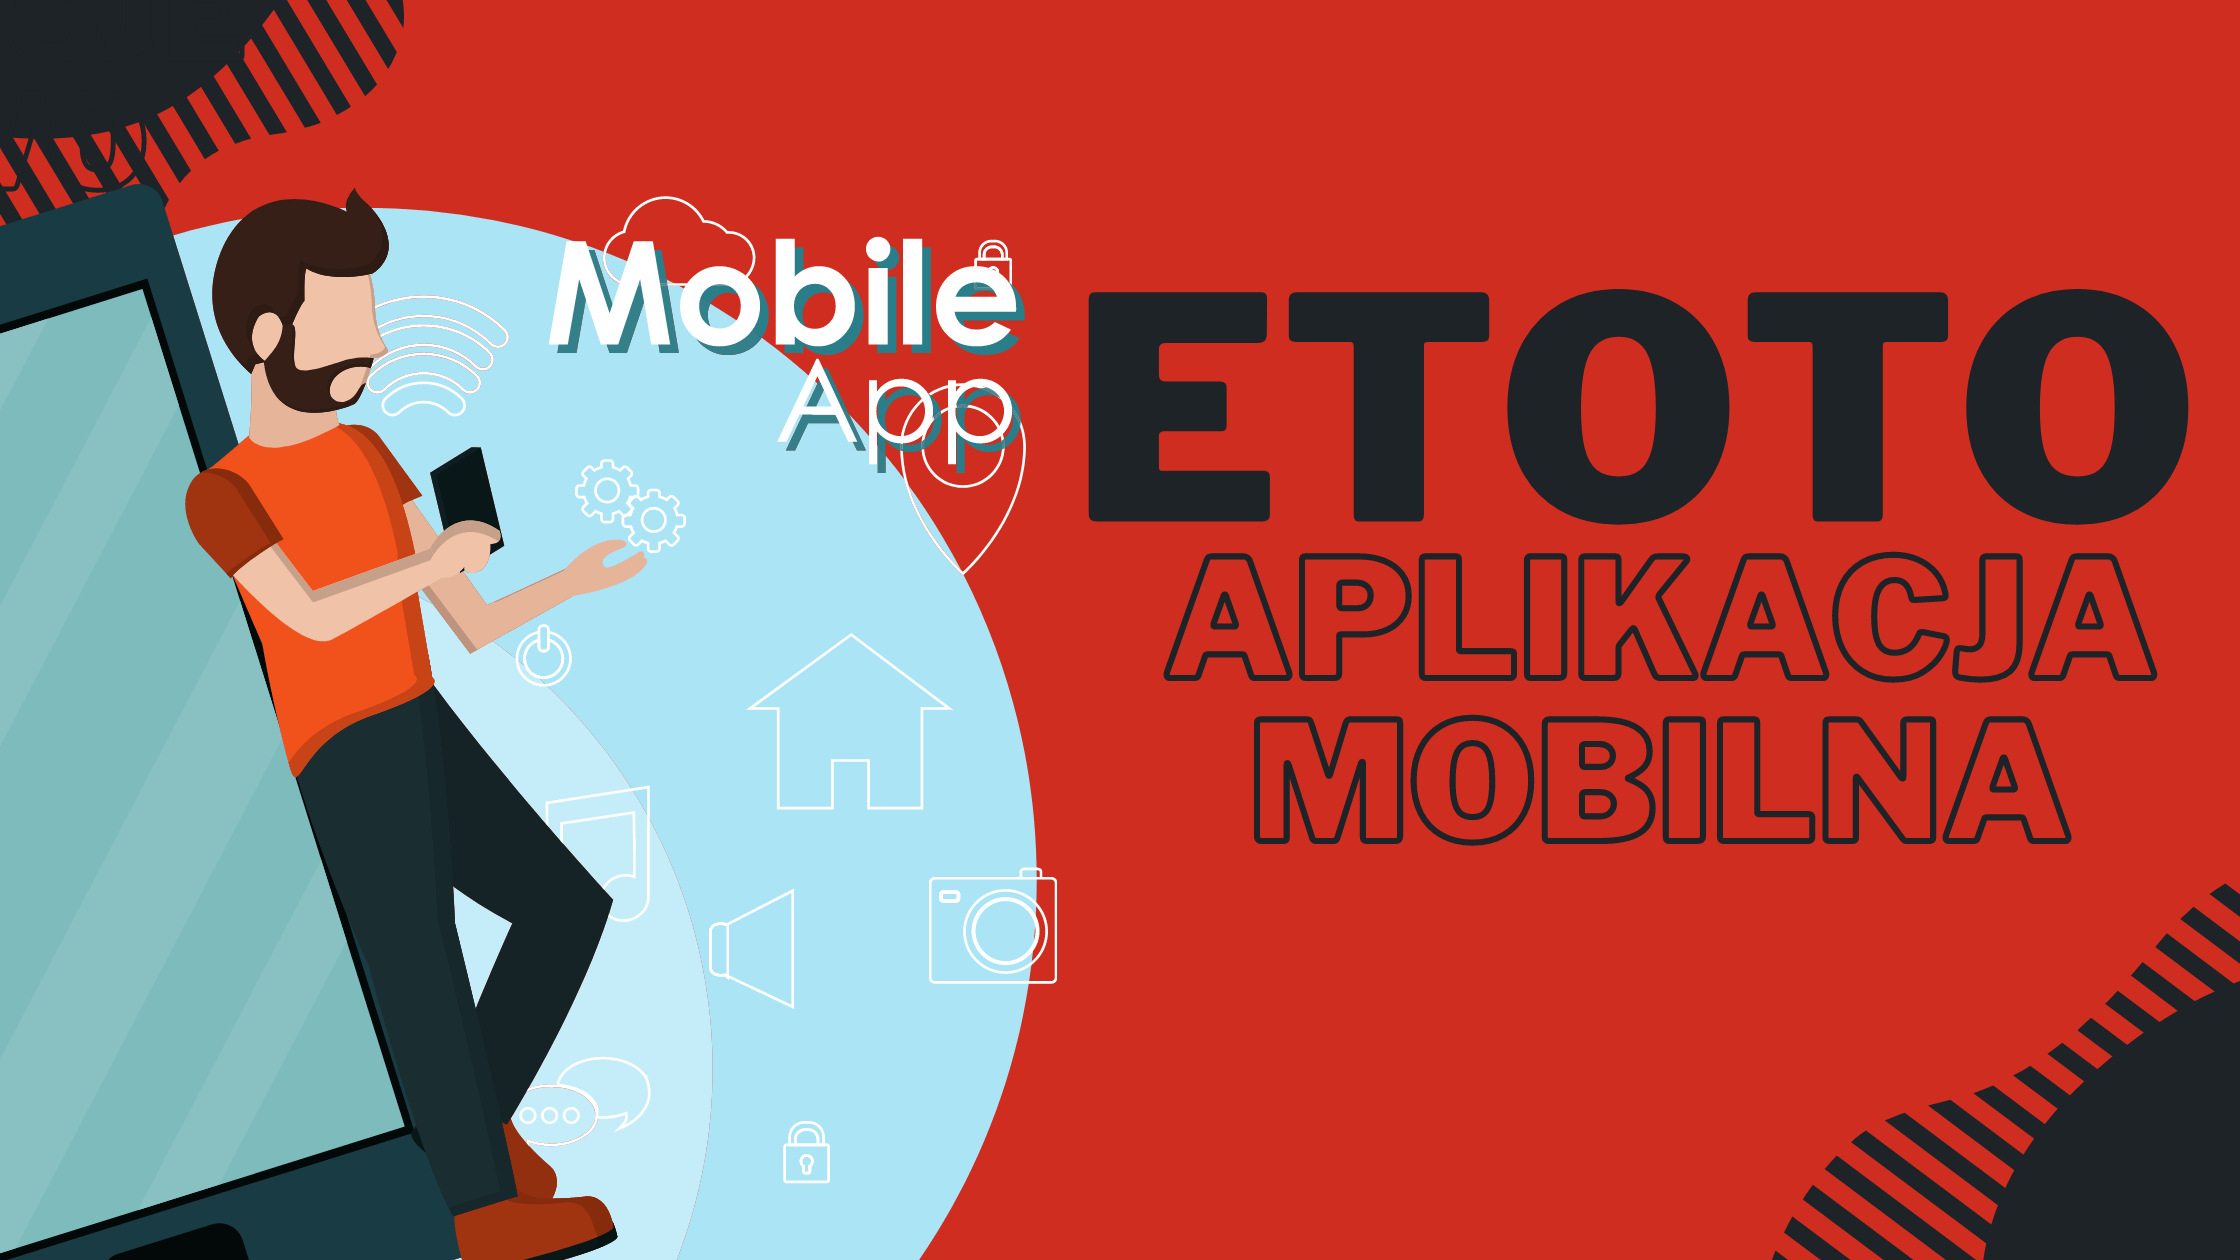 Etoto aplikacja mobilna na Android i iOS